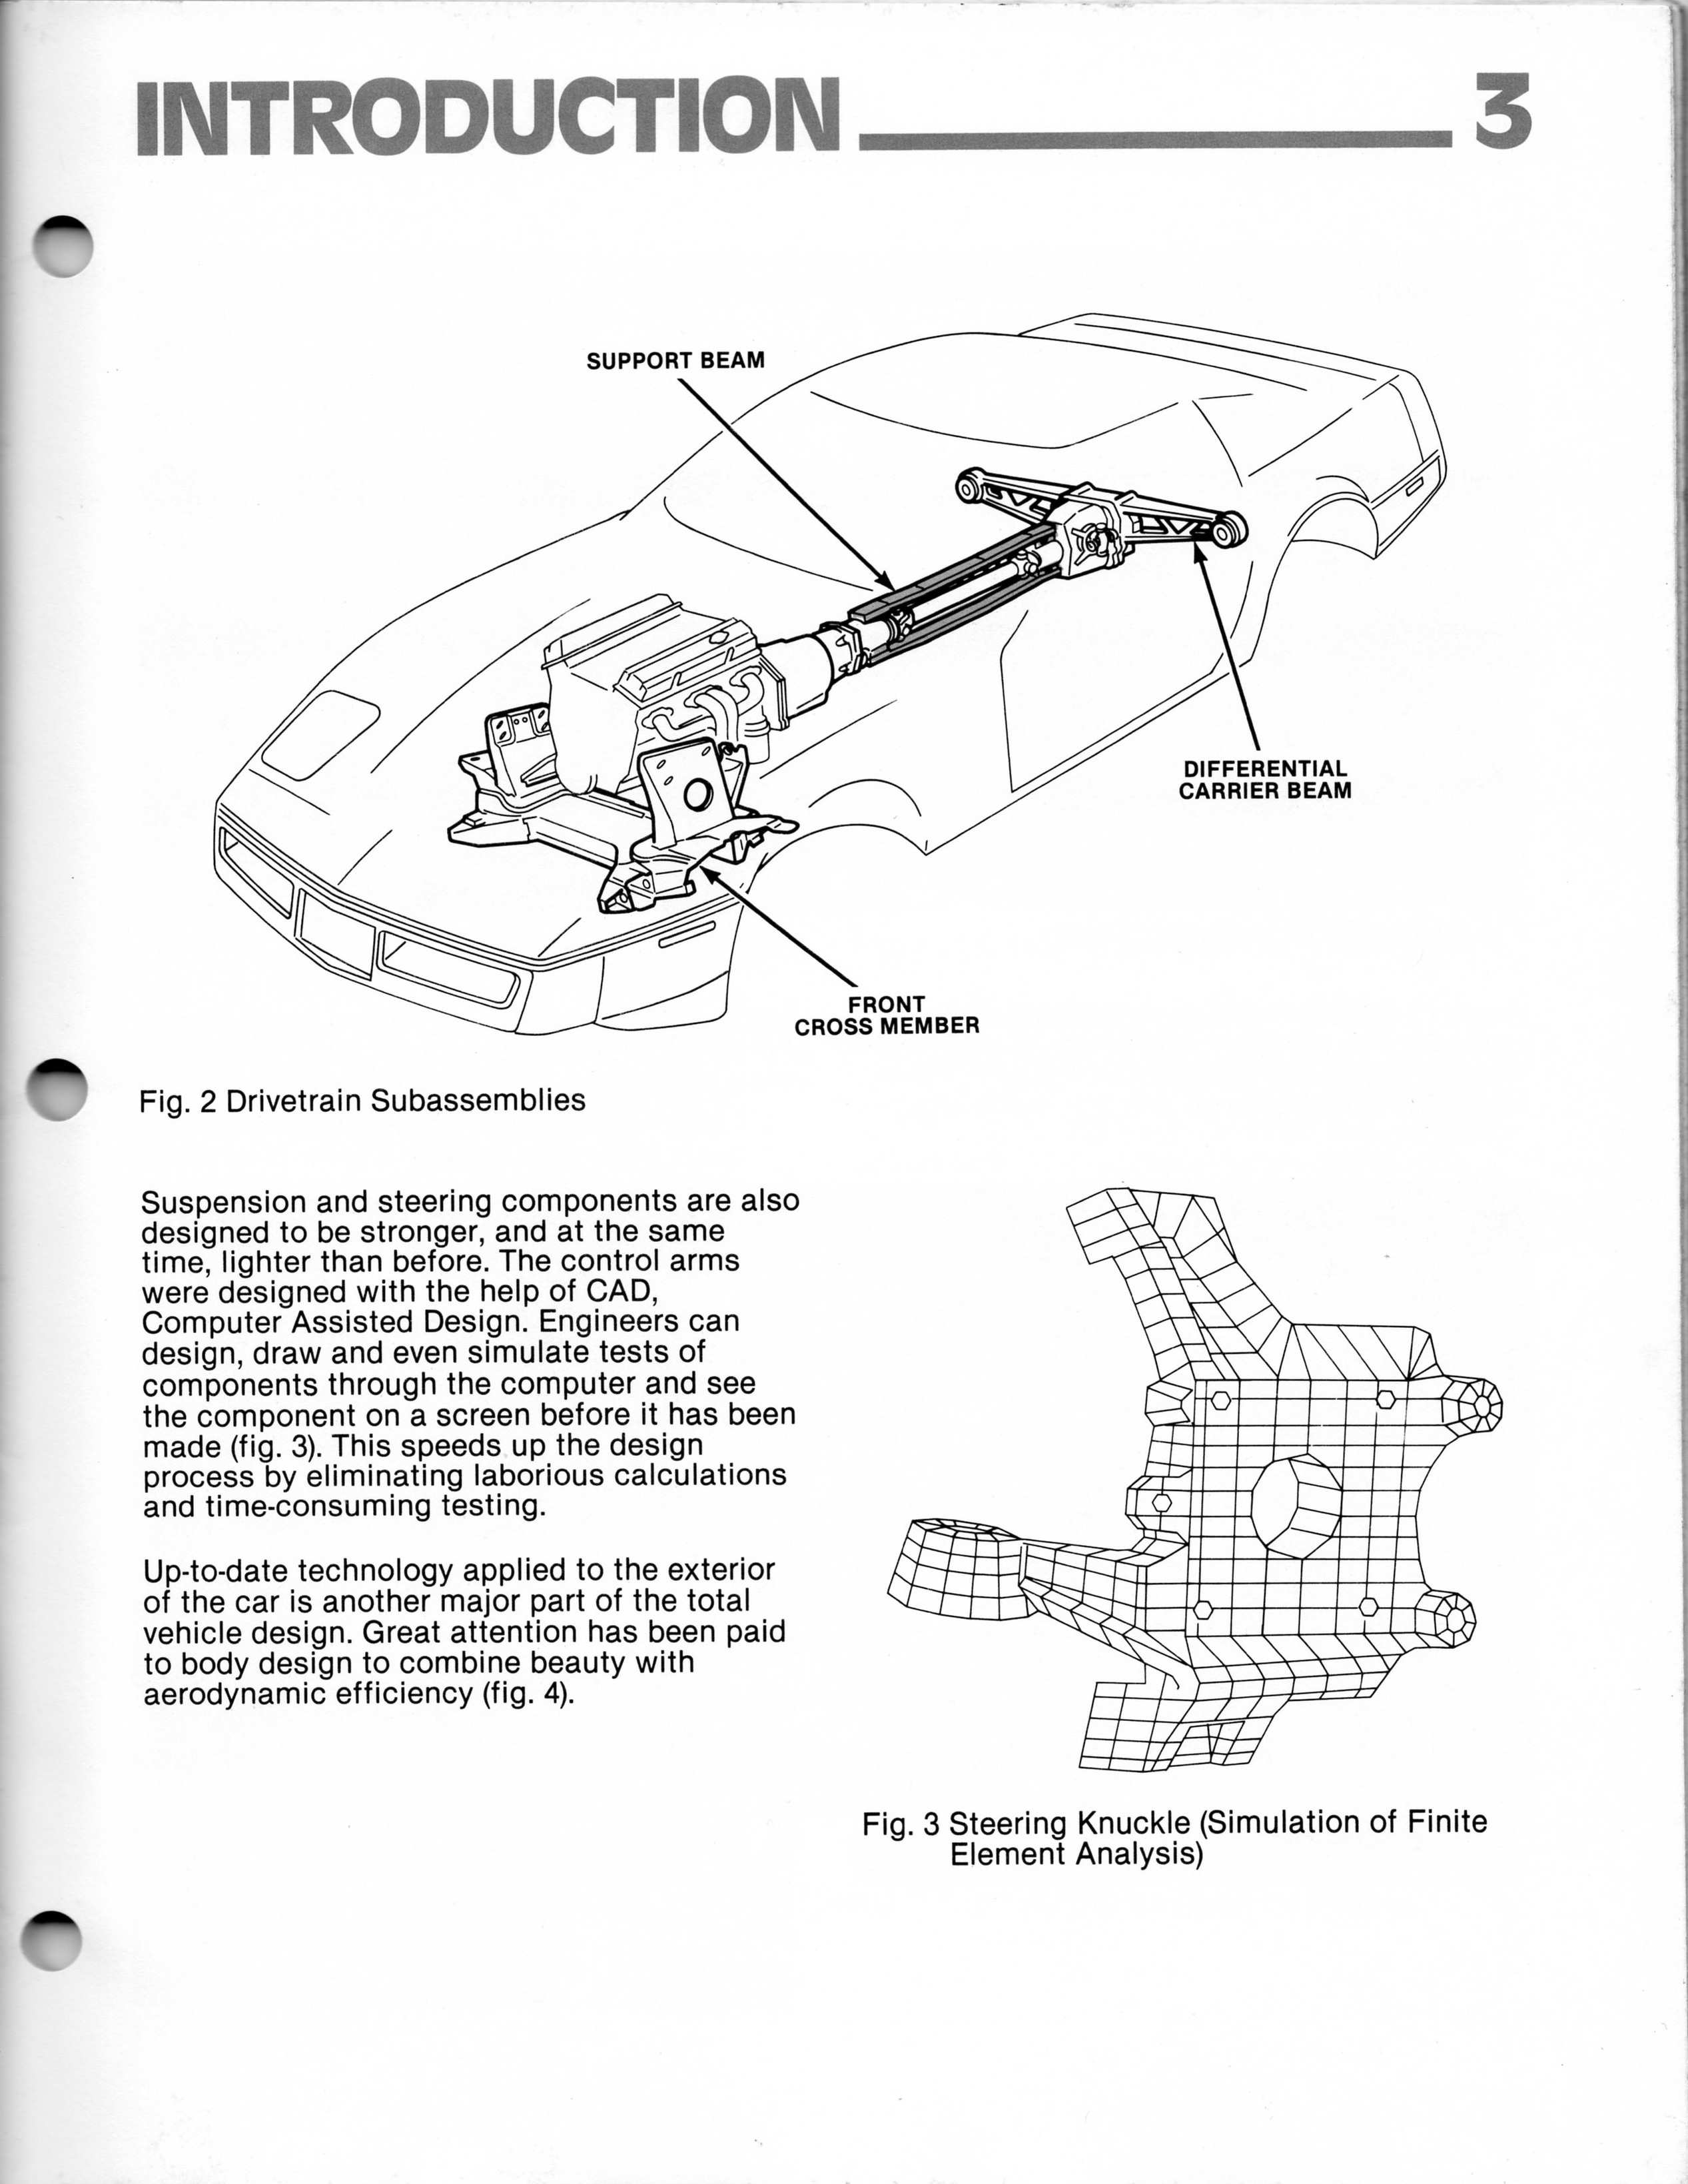 1984_Corvette_Service_Manual-03